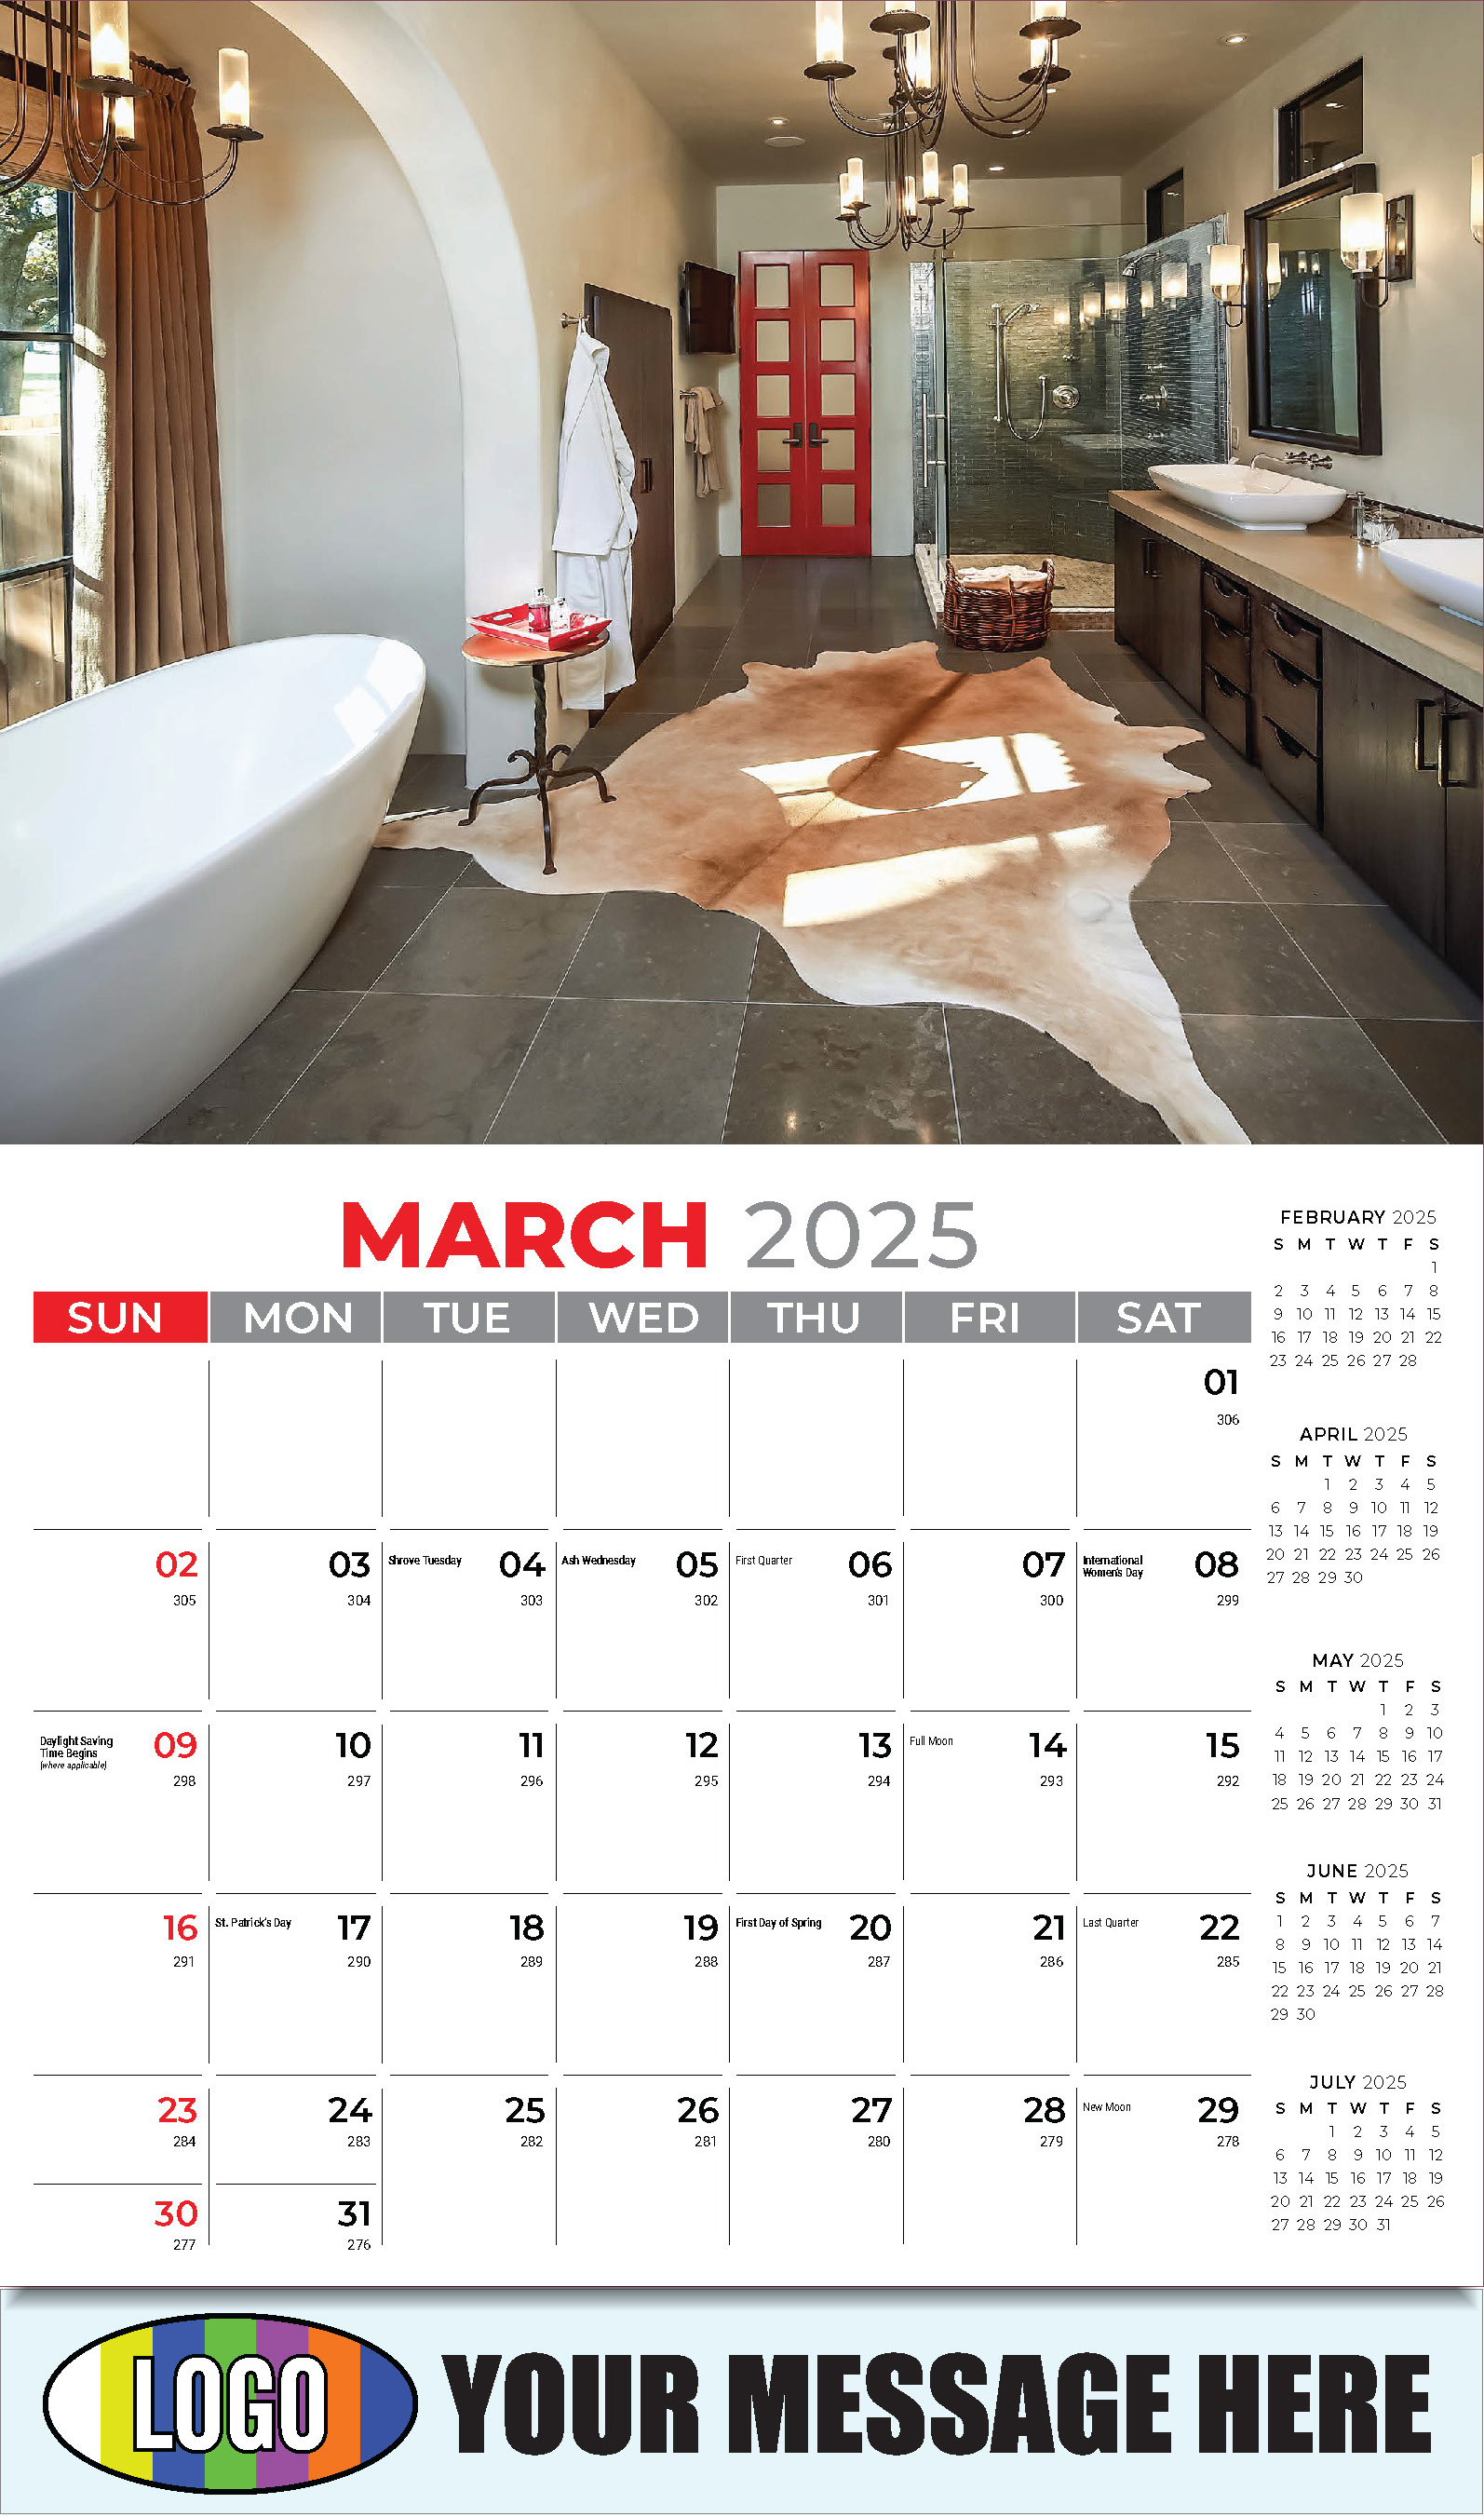 Decor and Design 2025 Interior Design Business Promotional Calendar - March